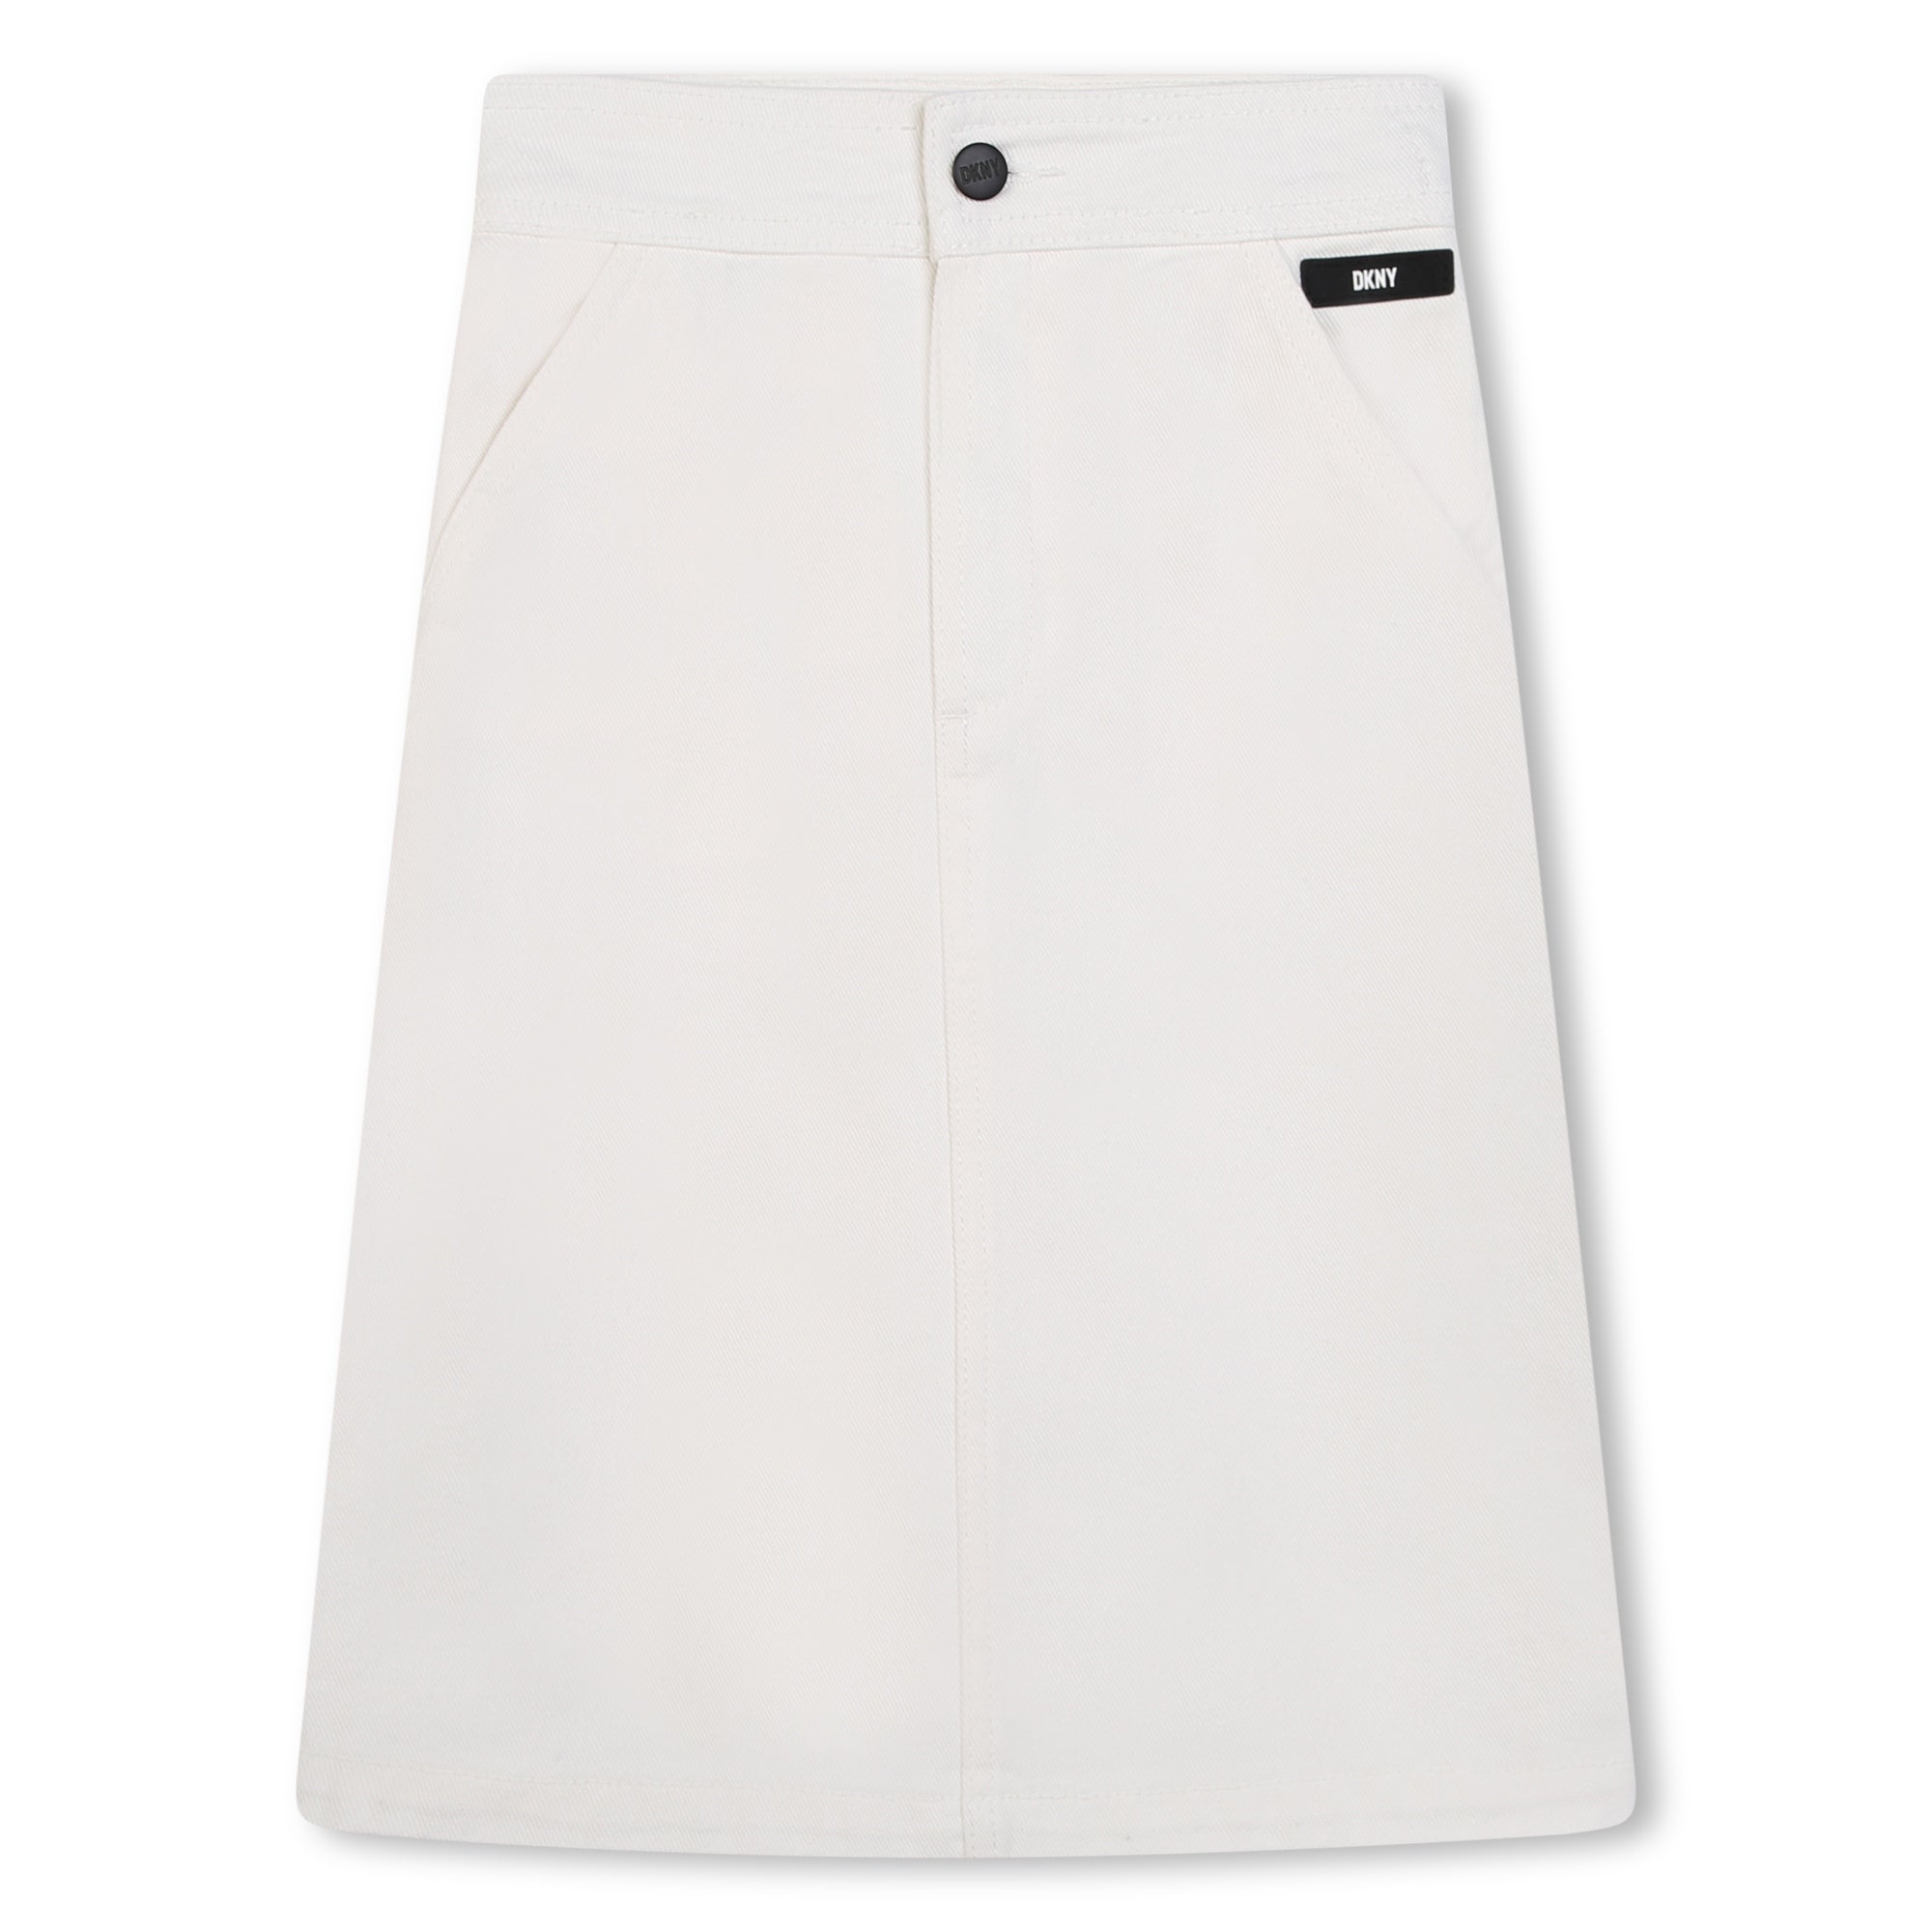 J. CREW Women's White Denim mini skirt SIZE 26 BI723 | eBay